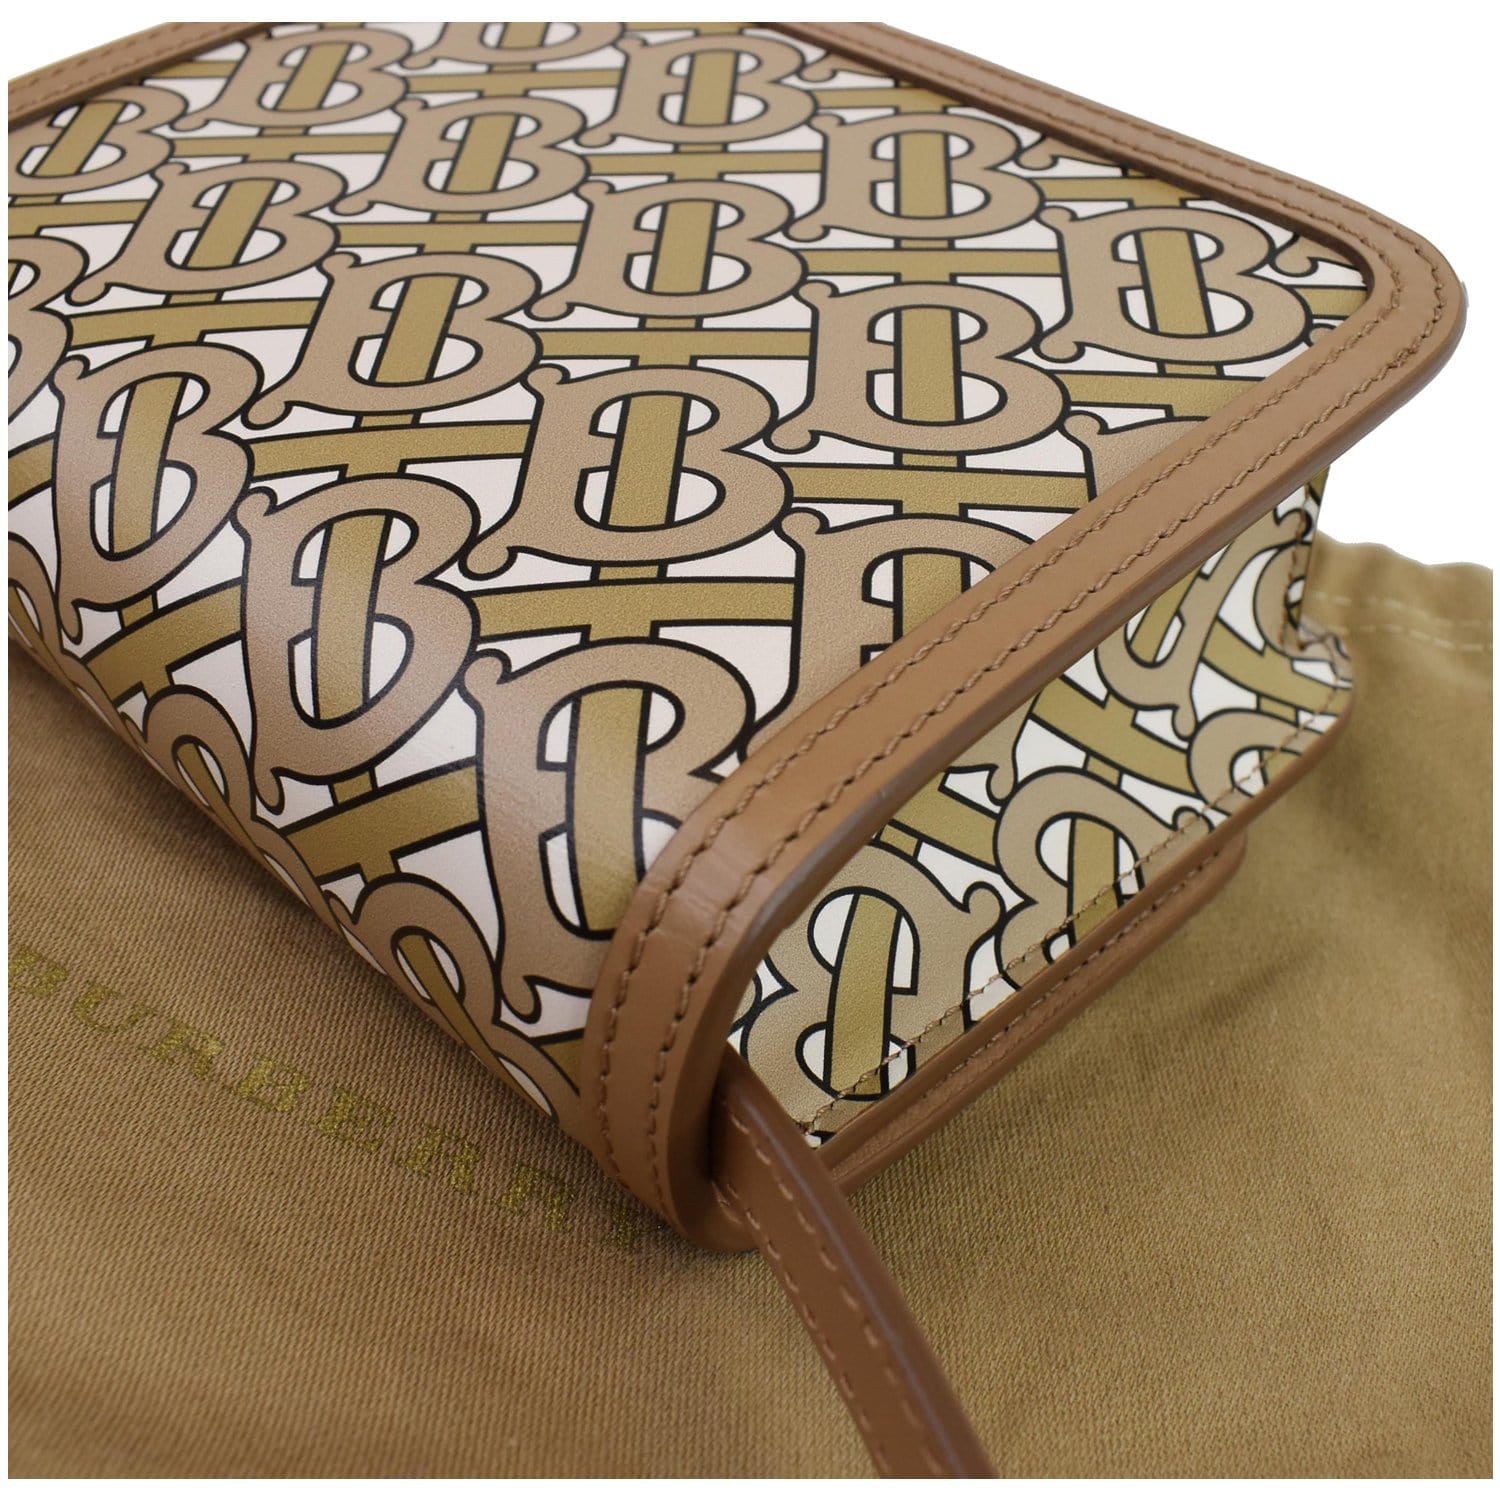 Burberry TB Monogram Bag Leather Envelope Crossbody / Clutch